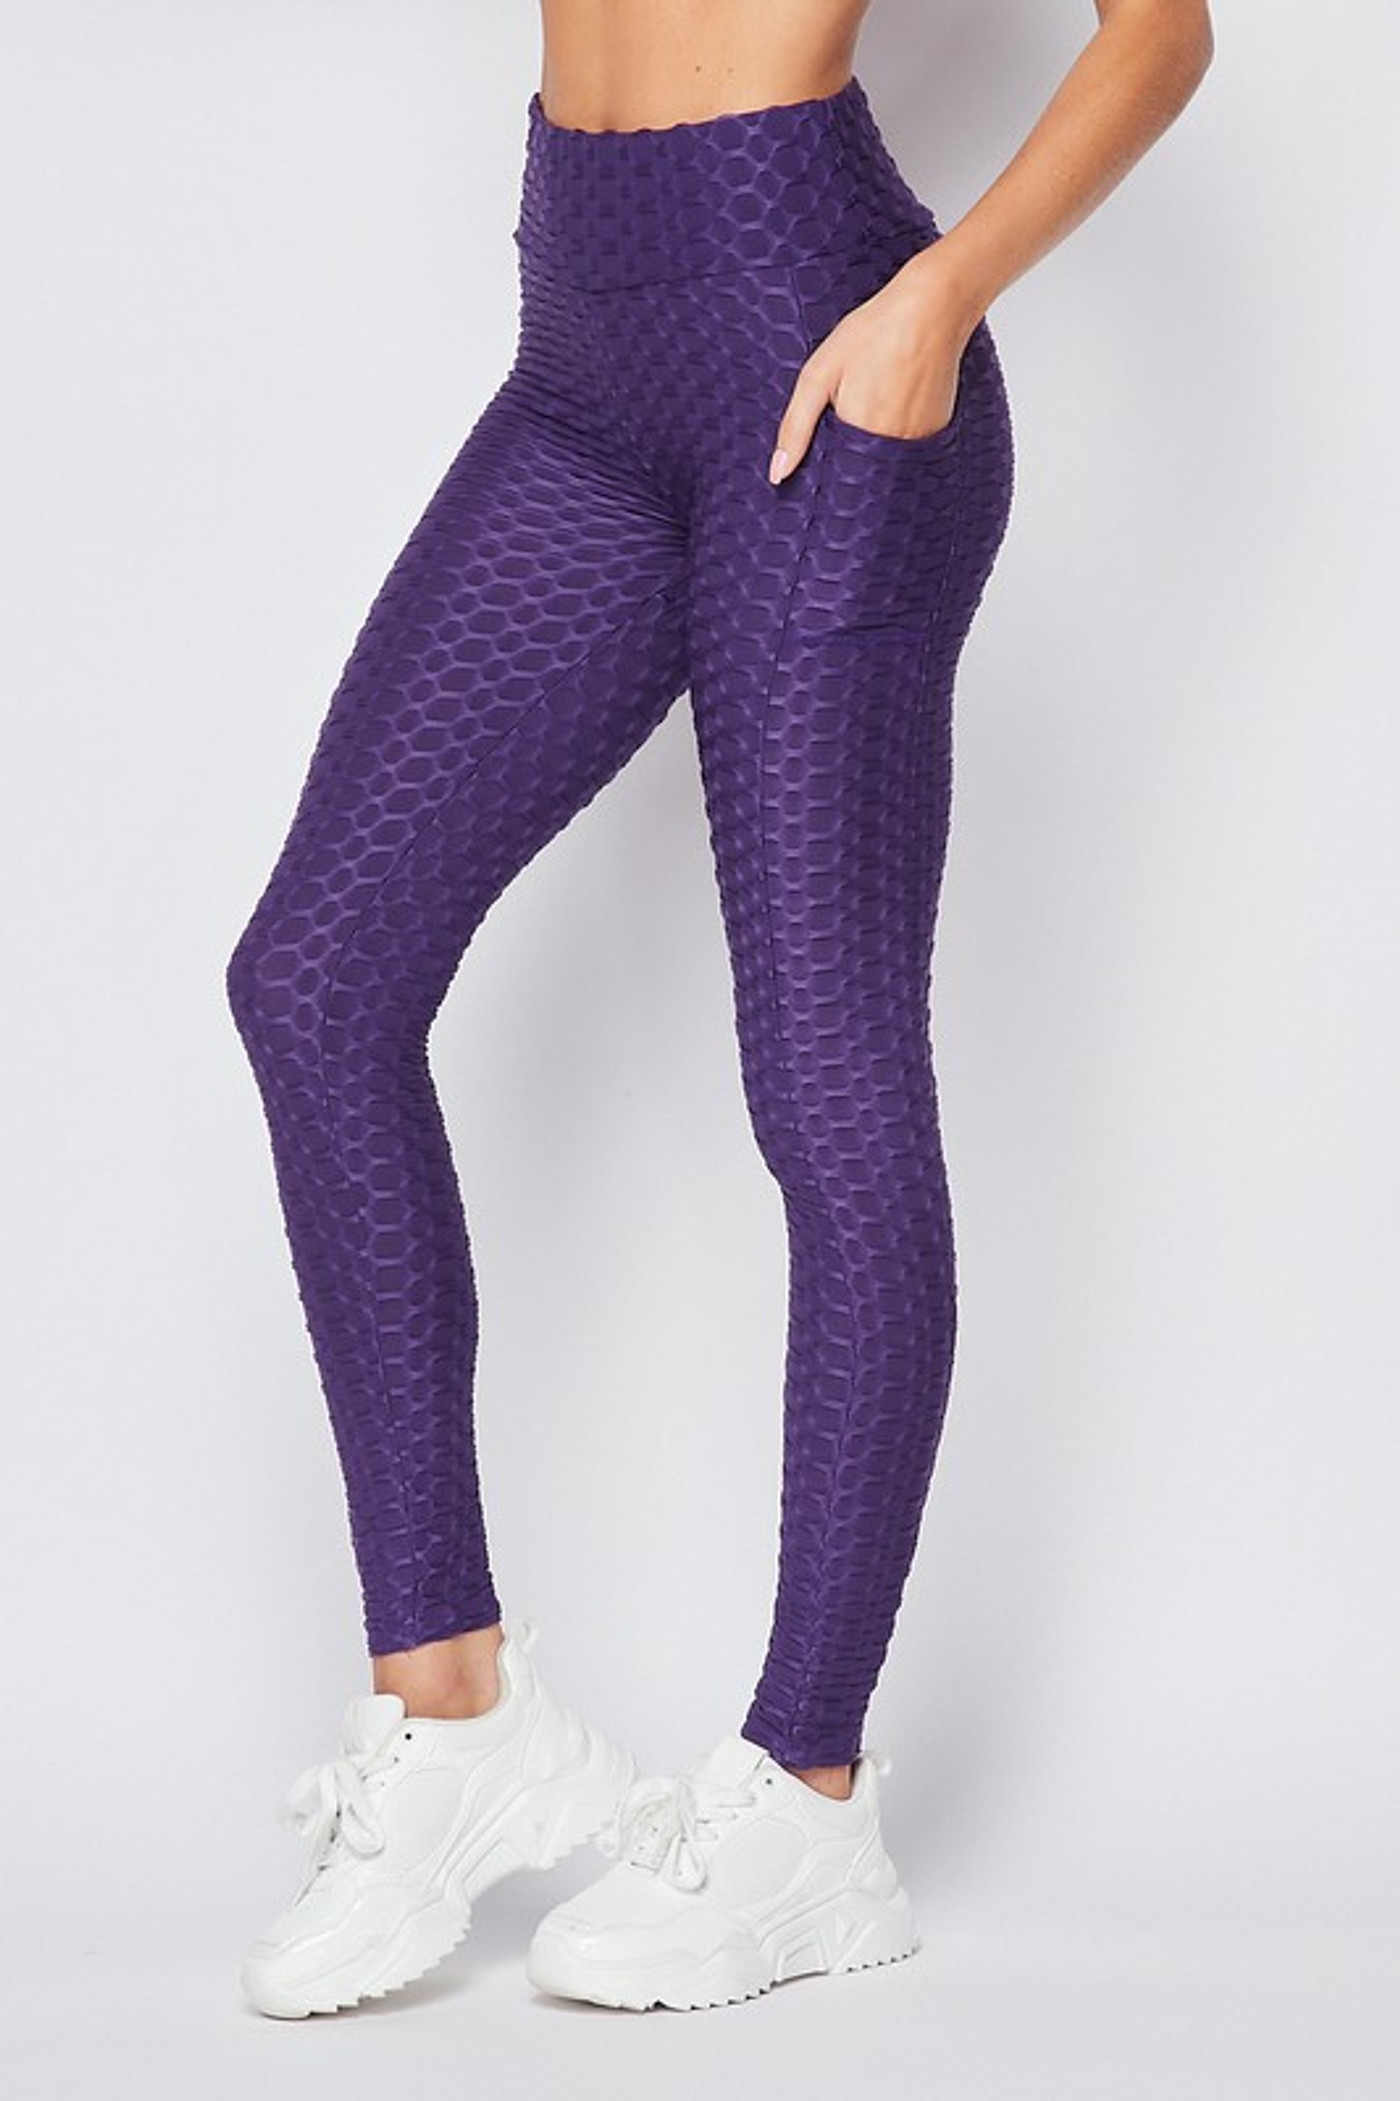 Discover 192+ womens purple leggings best